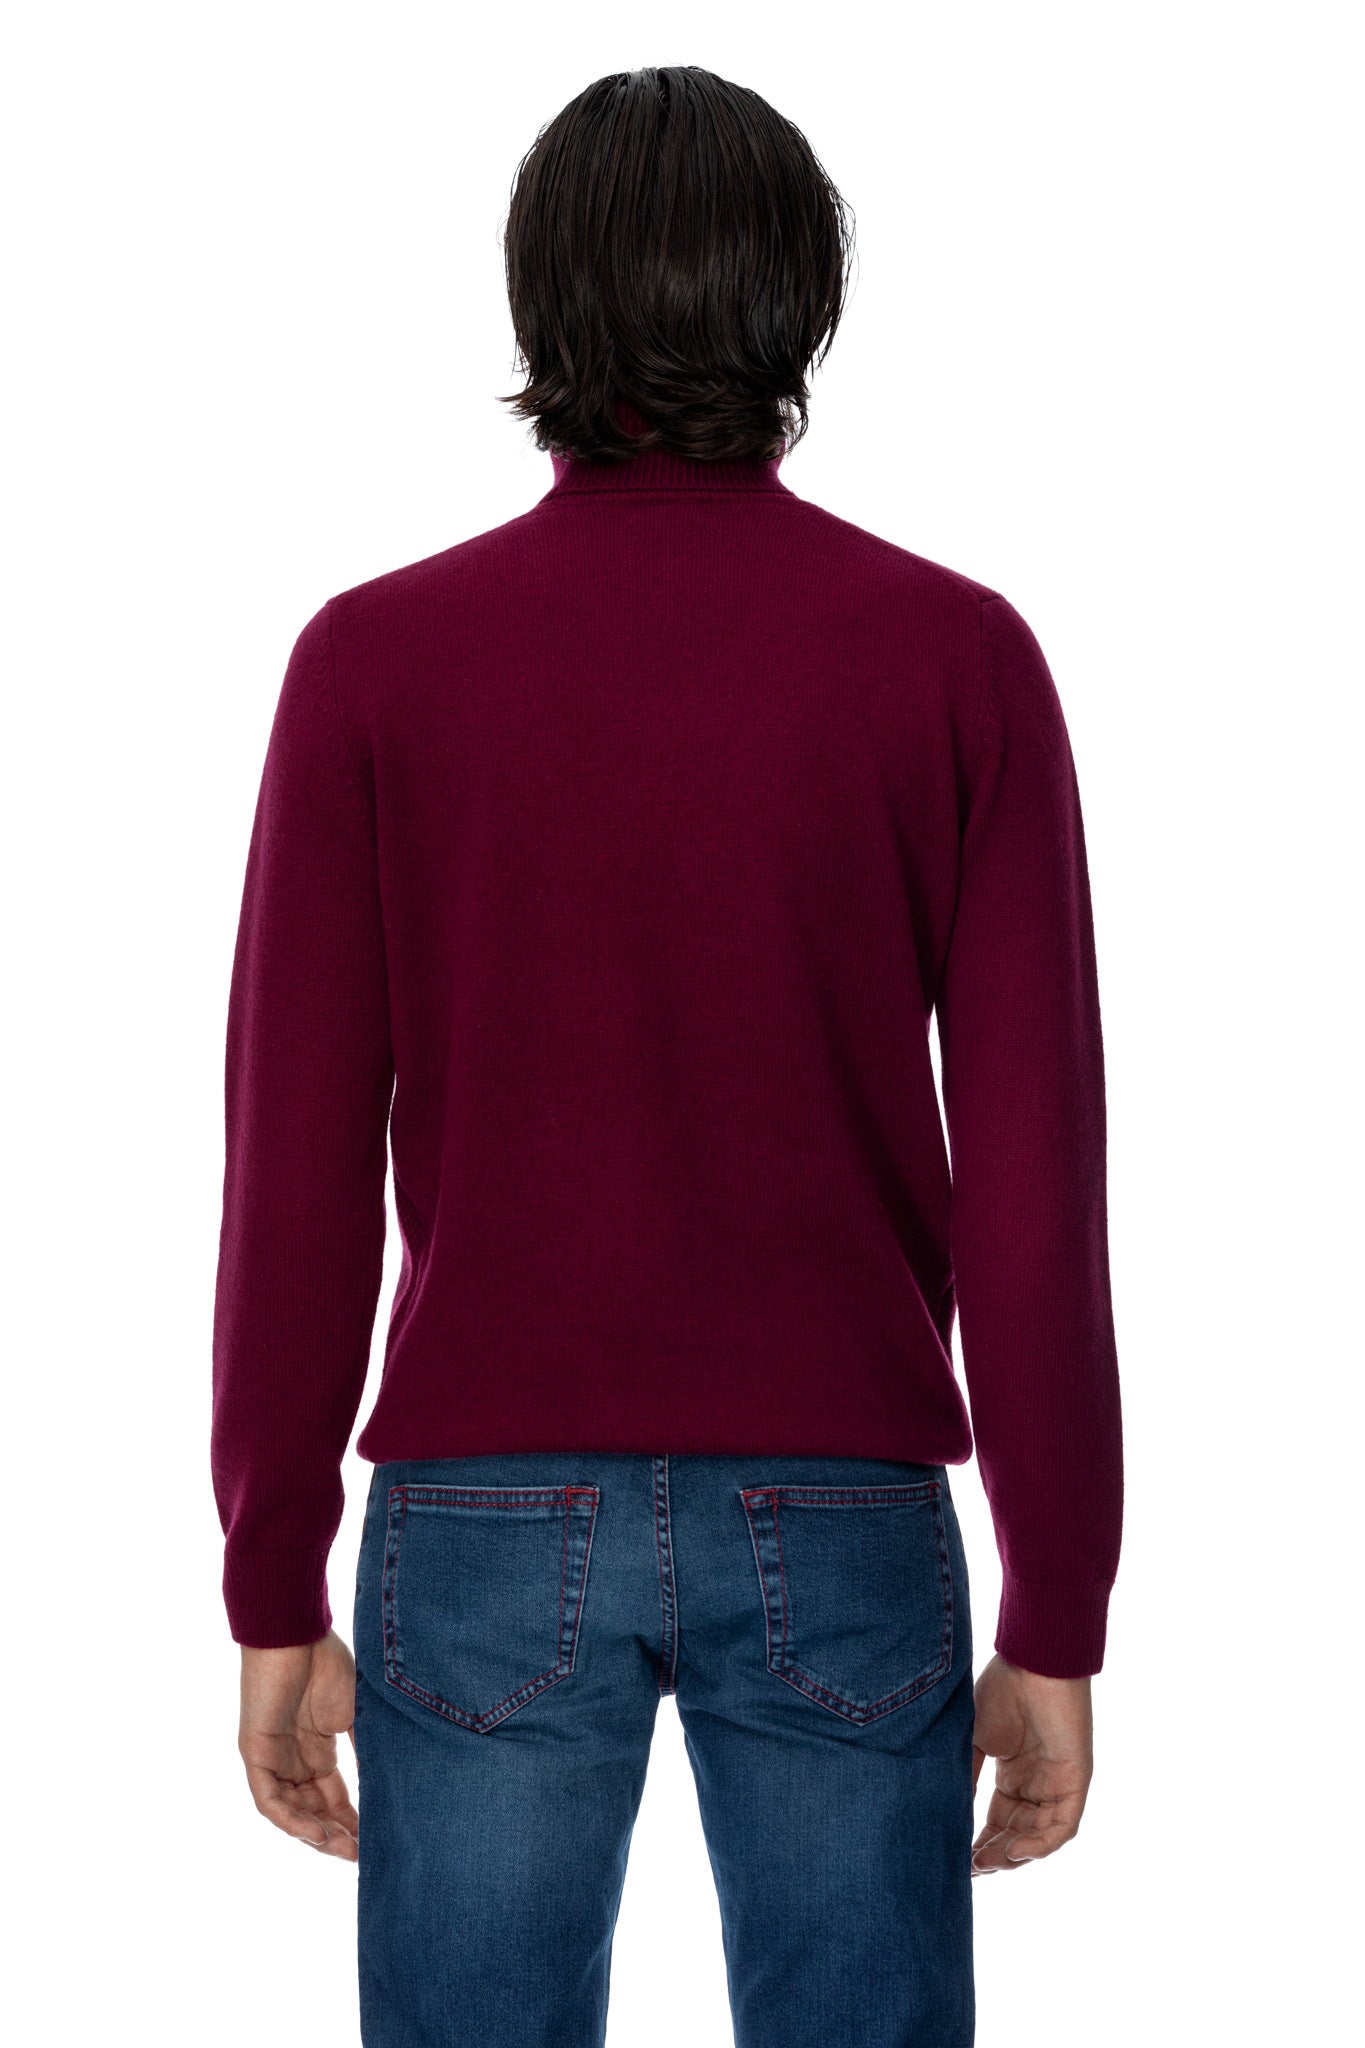 Burgundy cashmere neck sweater